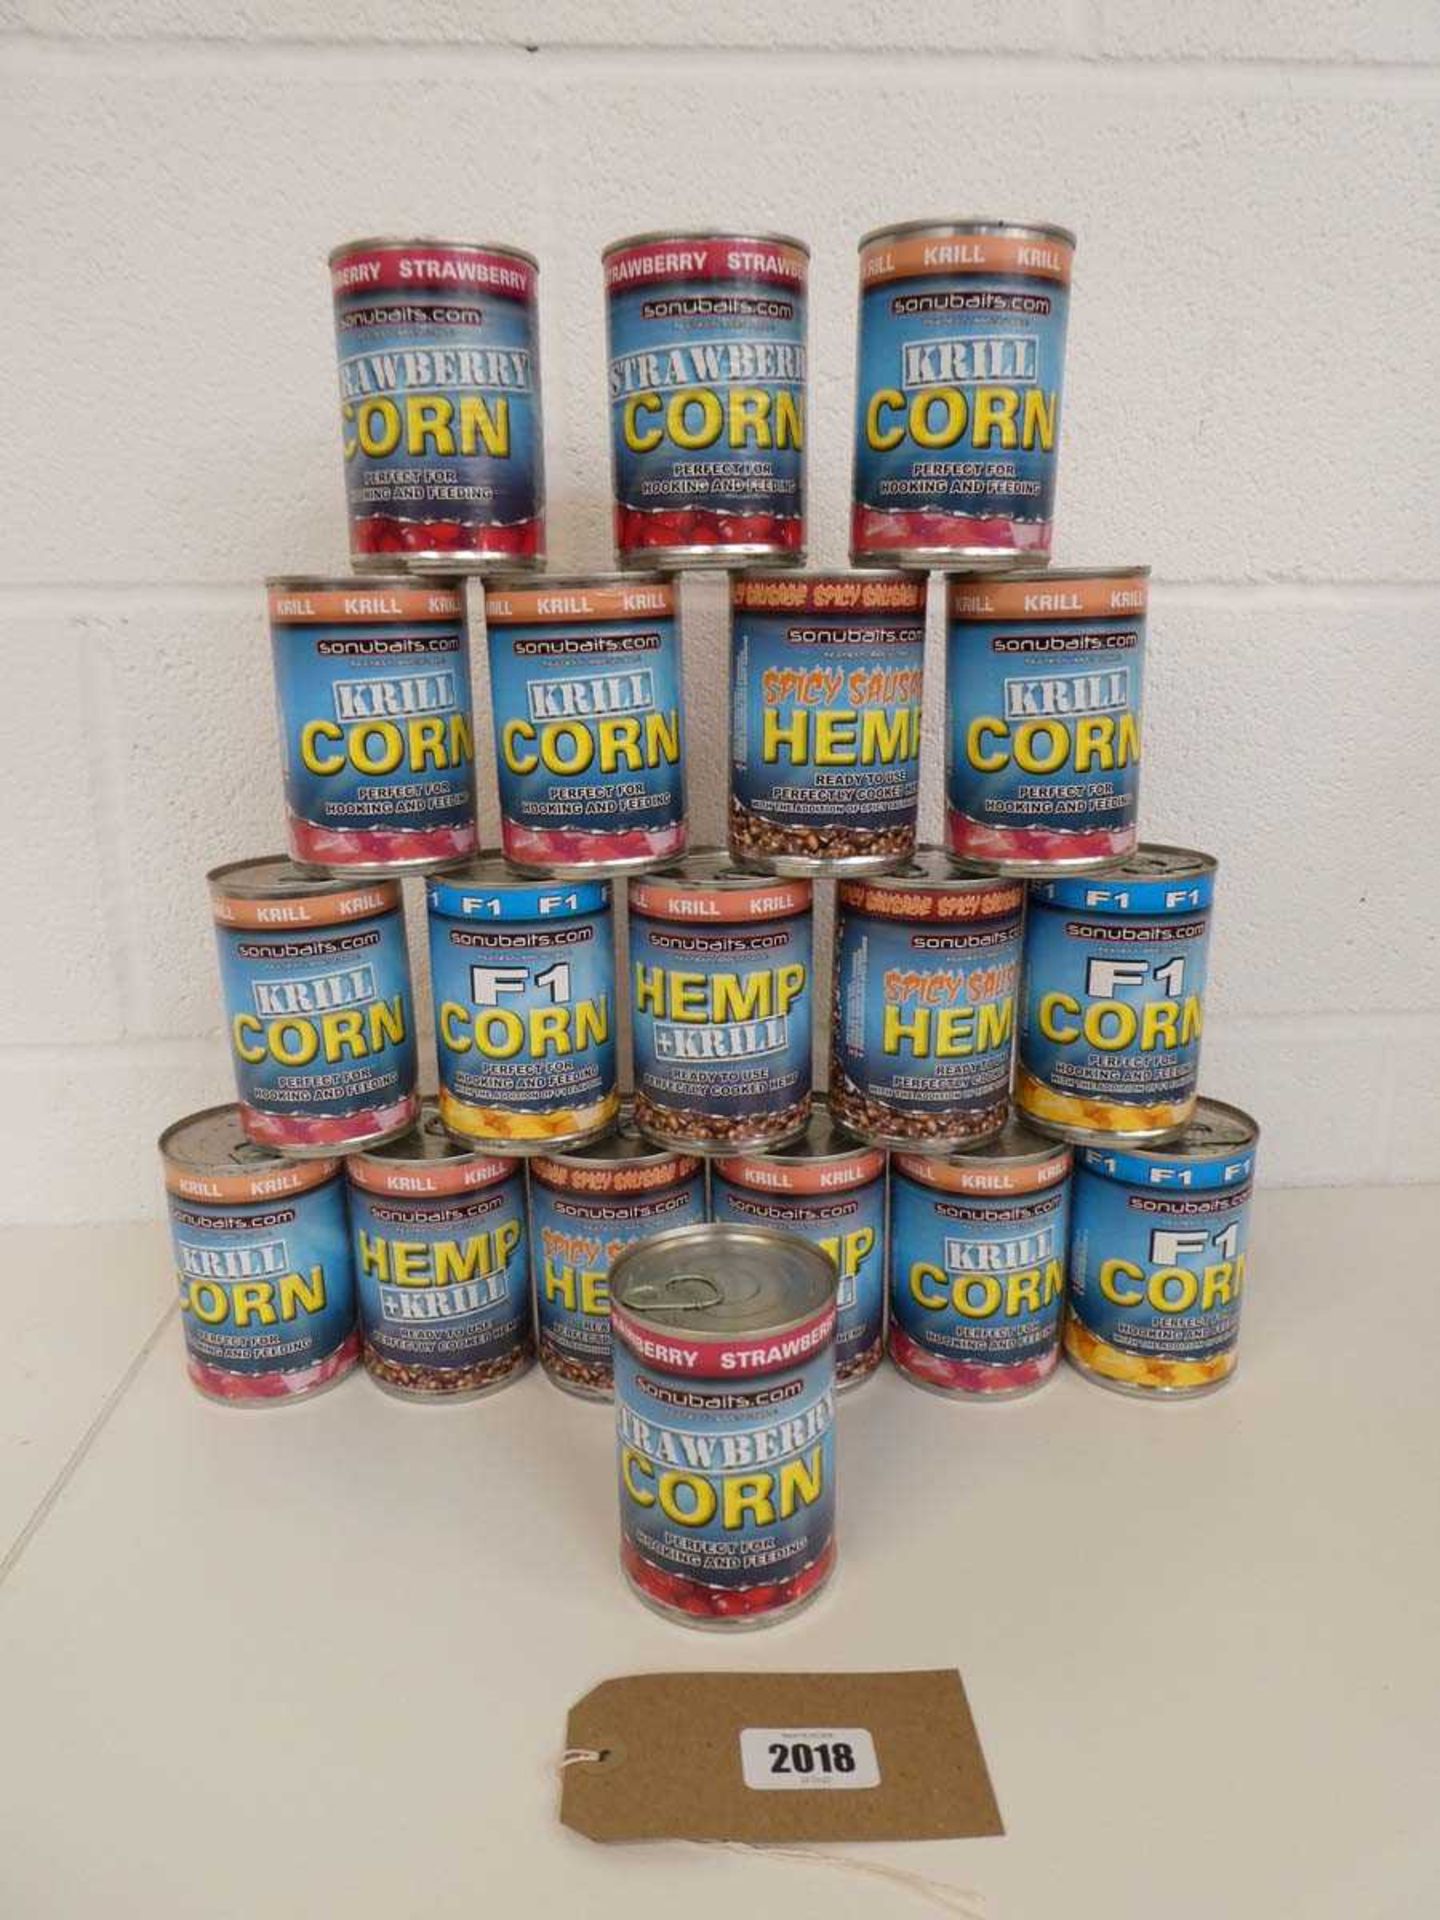 19 cans of Sonubaits hemp and corn incl. krill corn, F1 corn, strawberry corn, etc. (best before